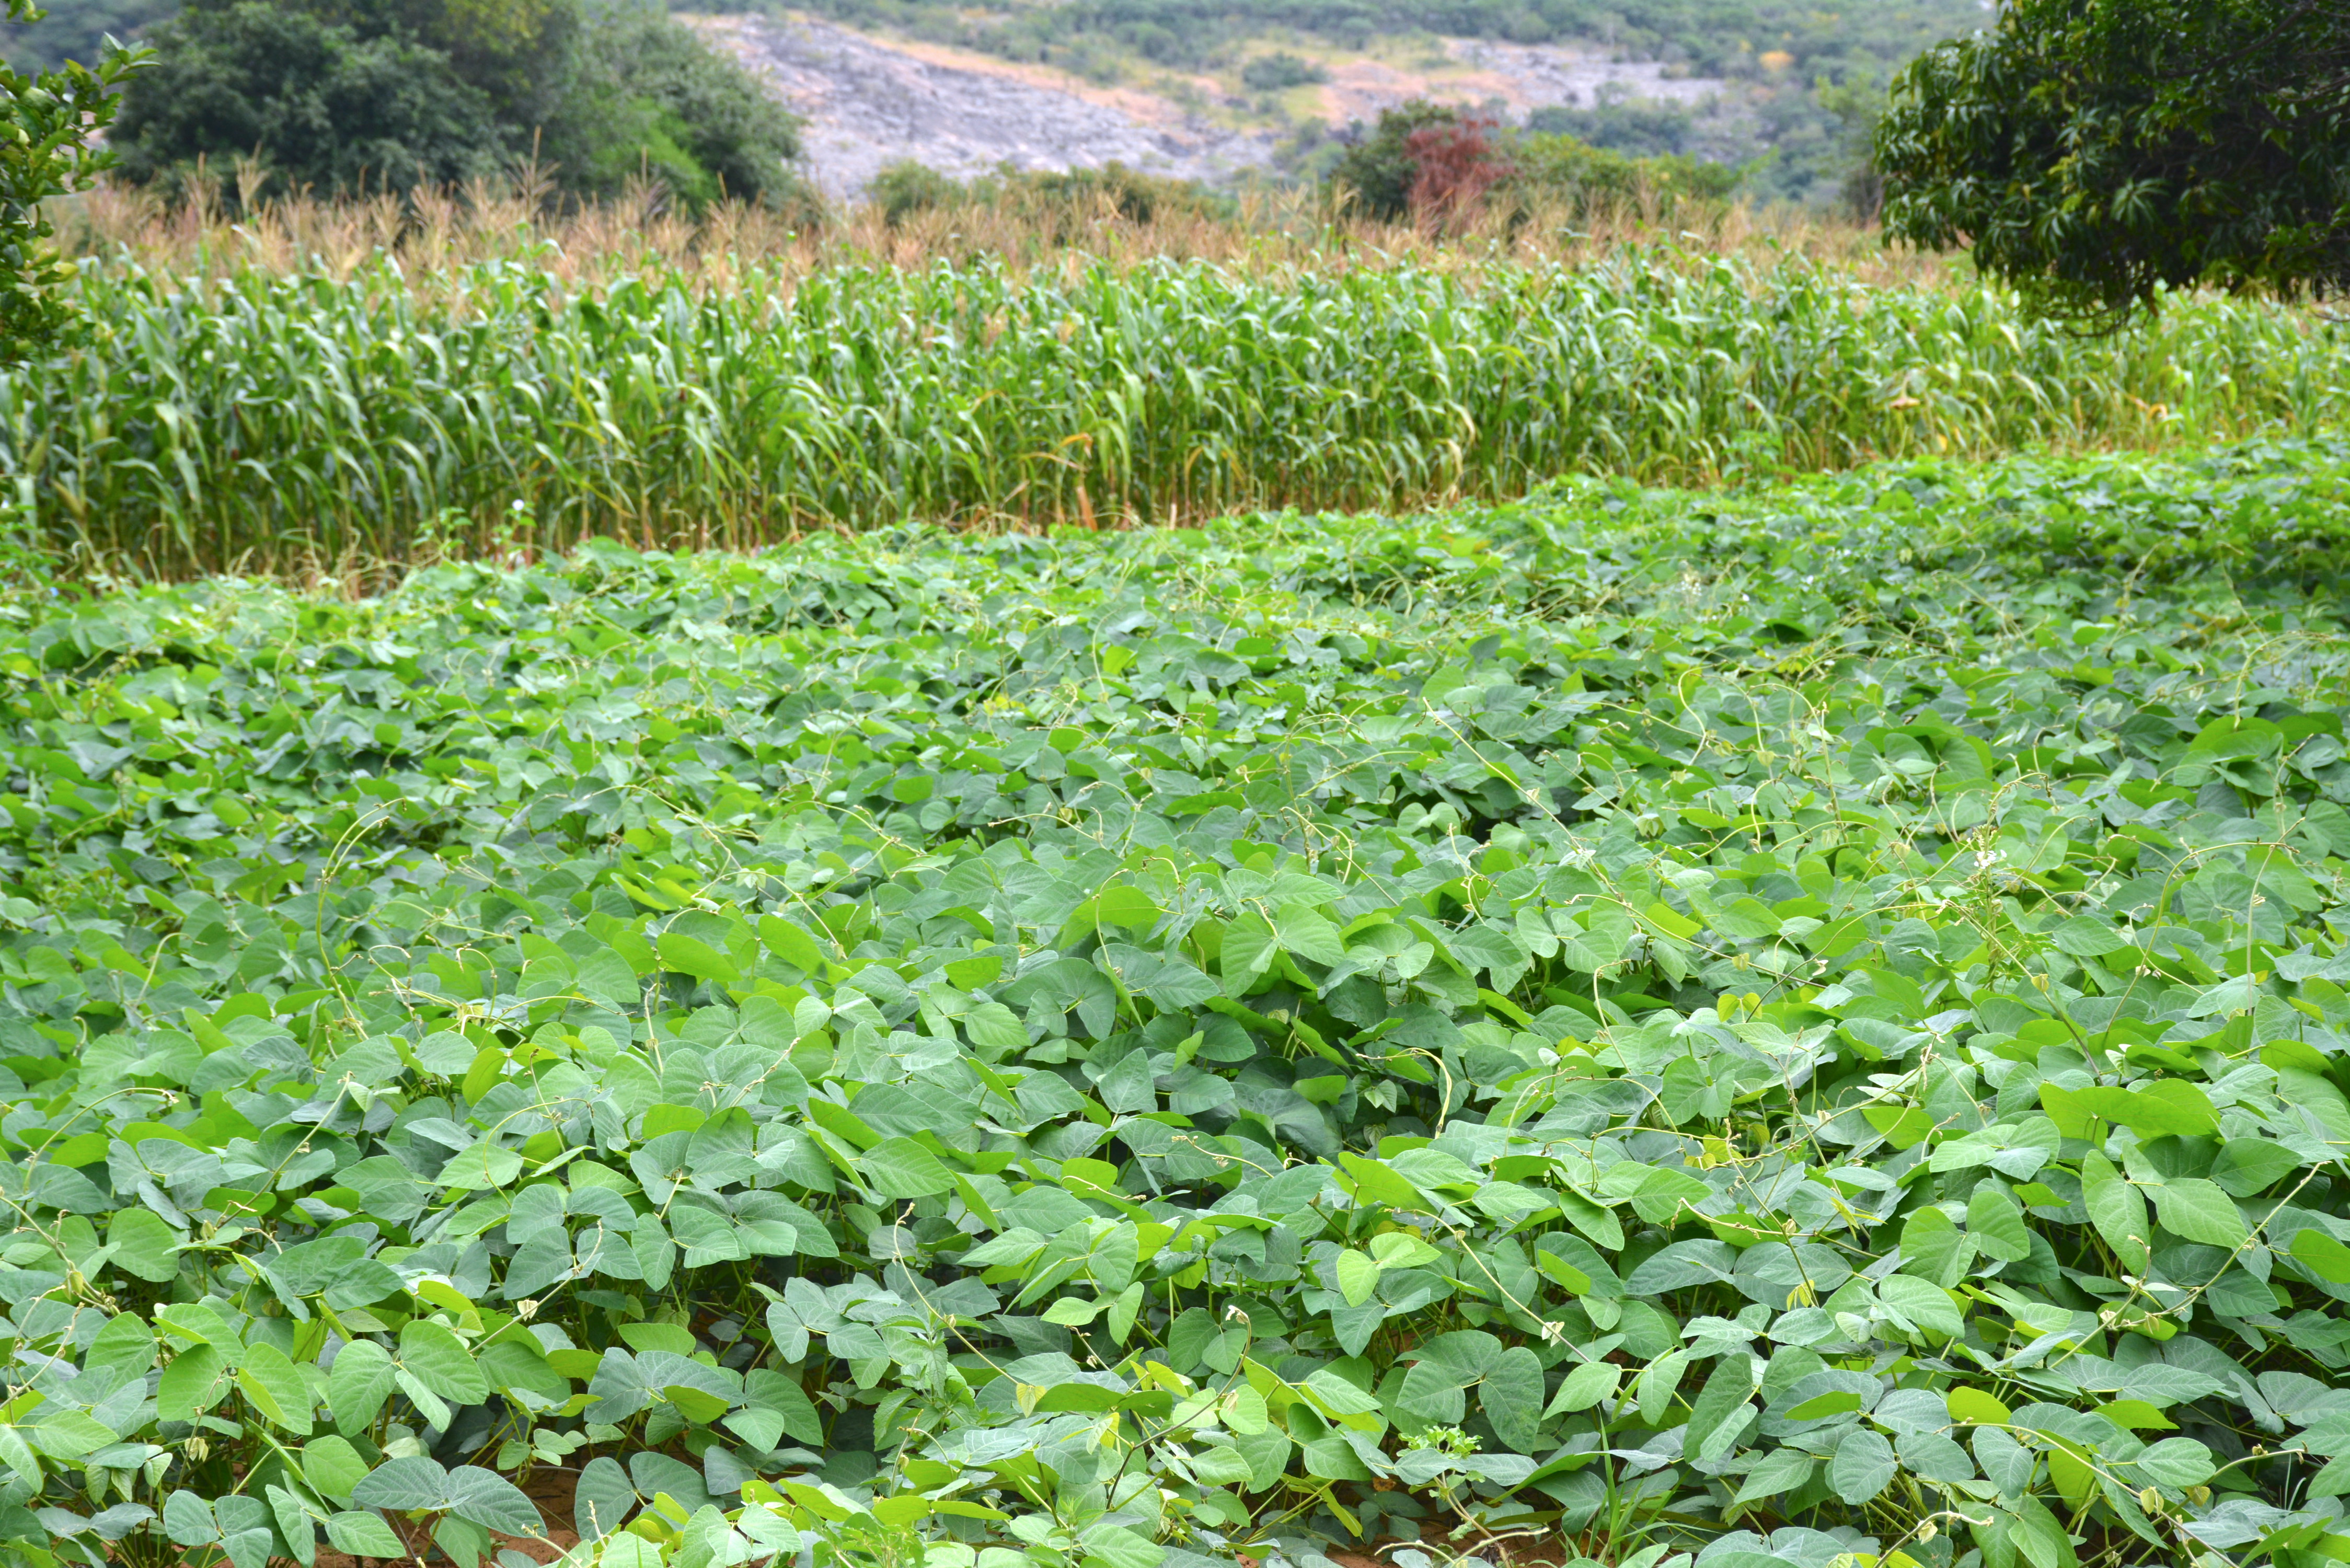 Crop rotation of maize and velvet bean at Kumbirai and Lilian Chiambadzwa's plot has guaranteed high yields in an El Nino season. (Photo: Shiela Chikulo/CIMMYT)